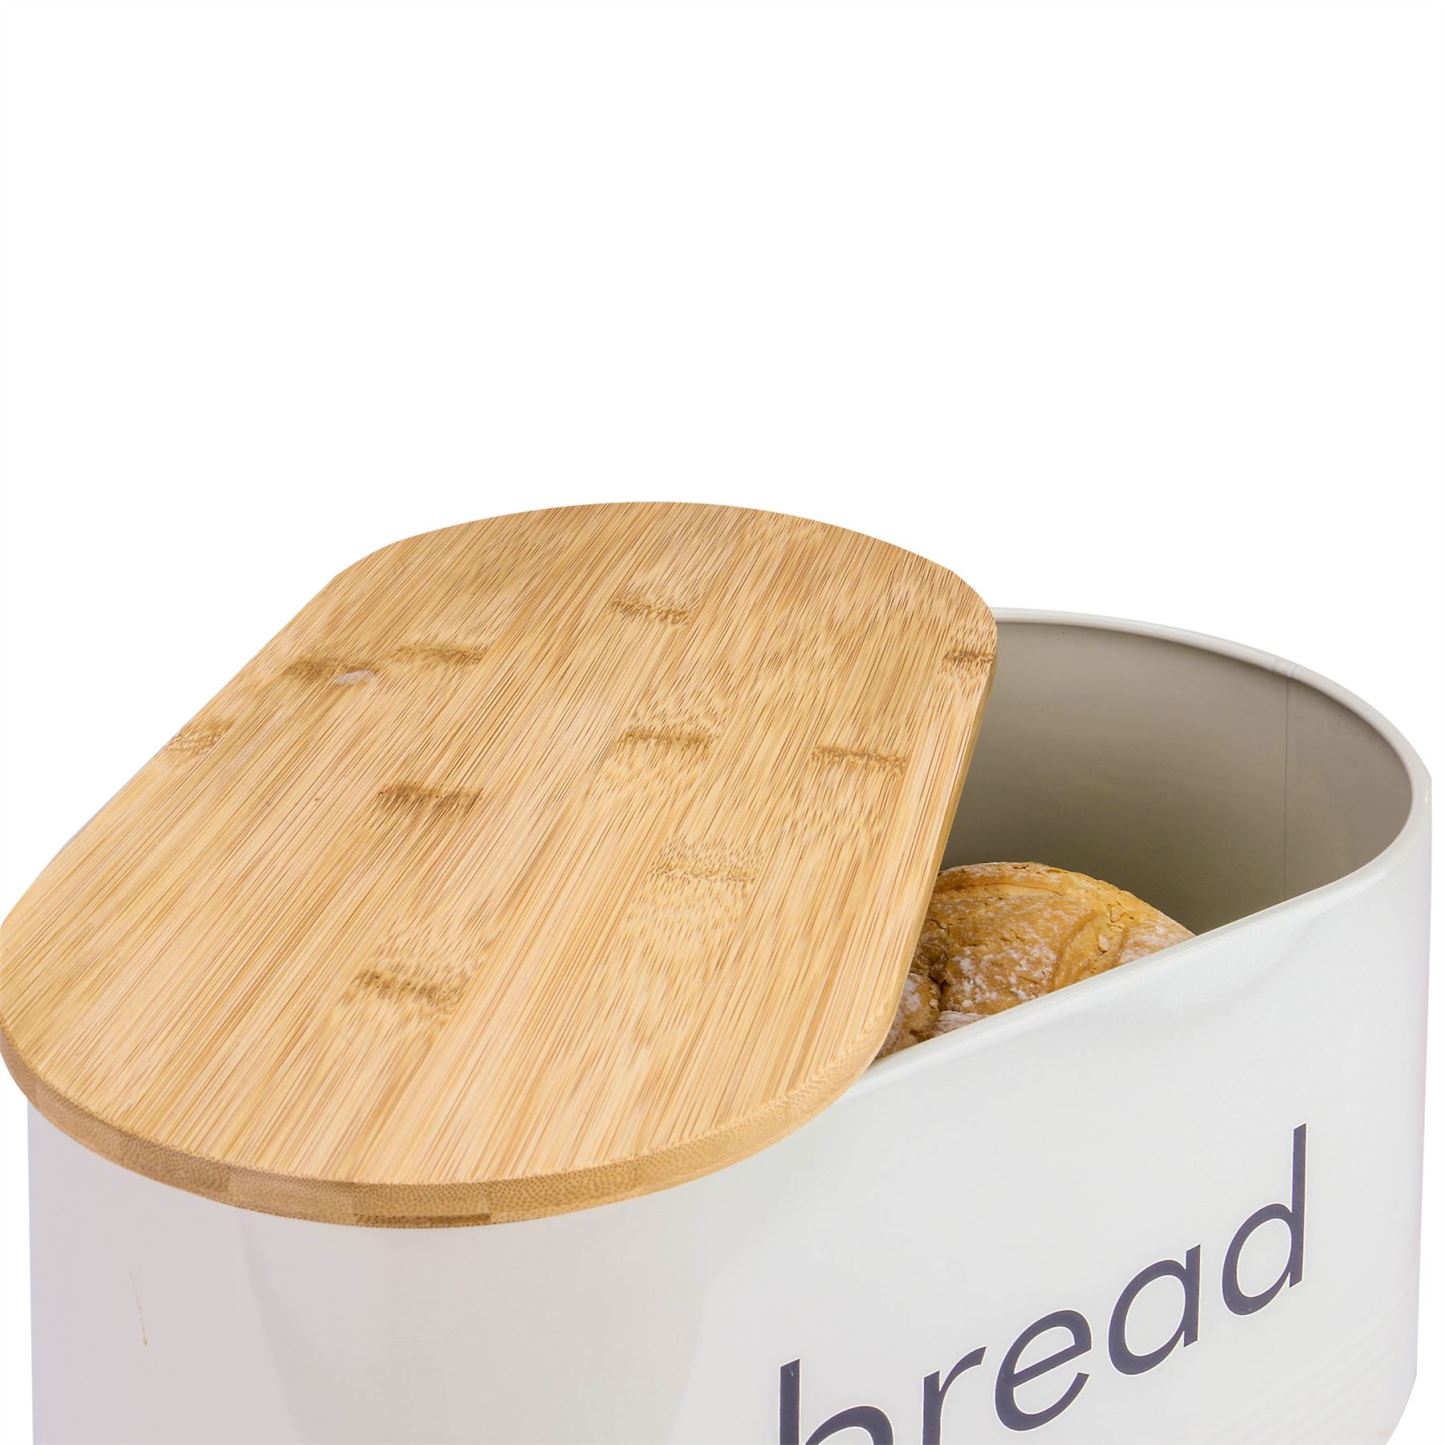 Kitchen Bread Bin with Bamboo Chopping Board Lid | M&W